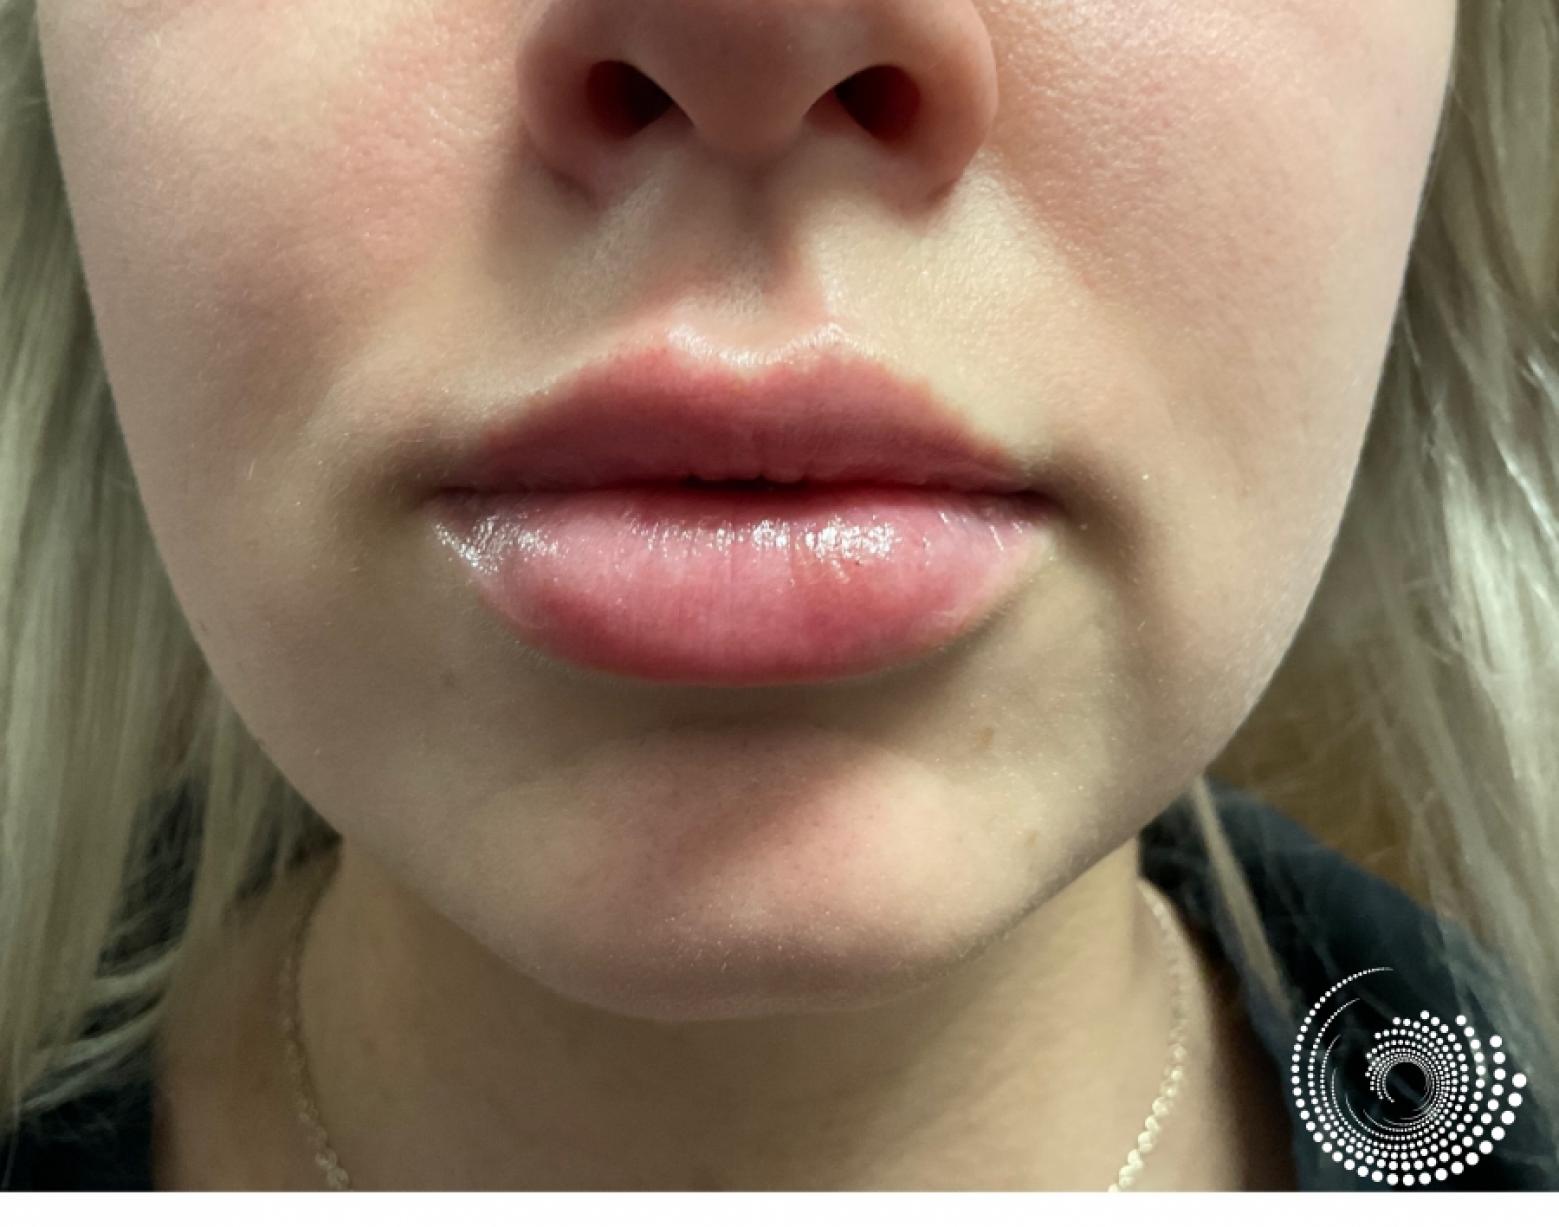 Filler - Lips: Patient 5 - After  